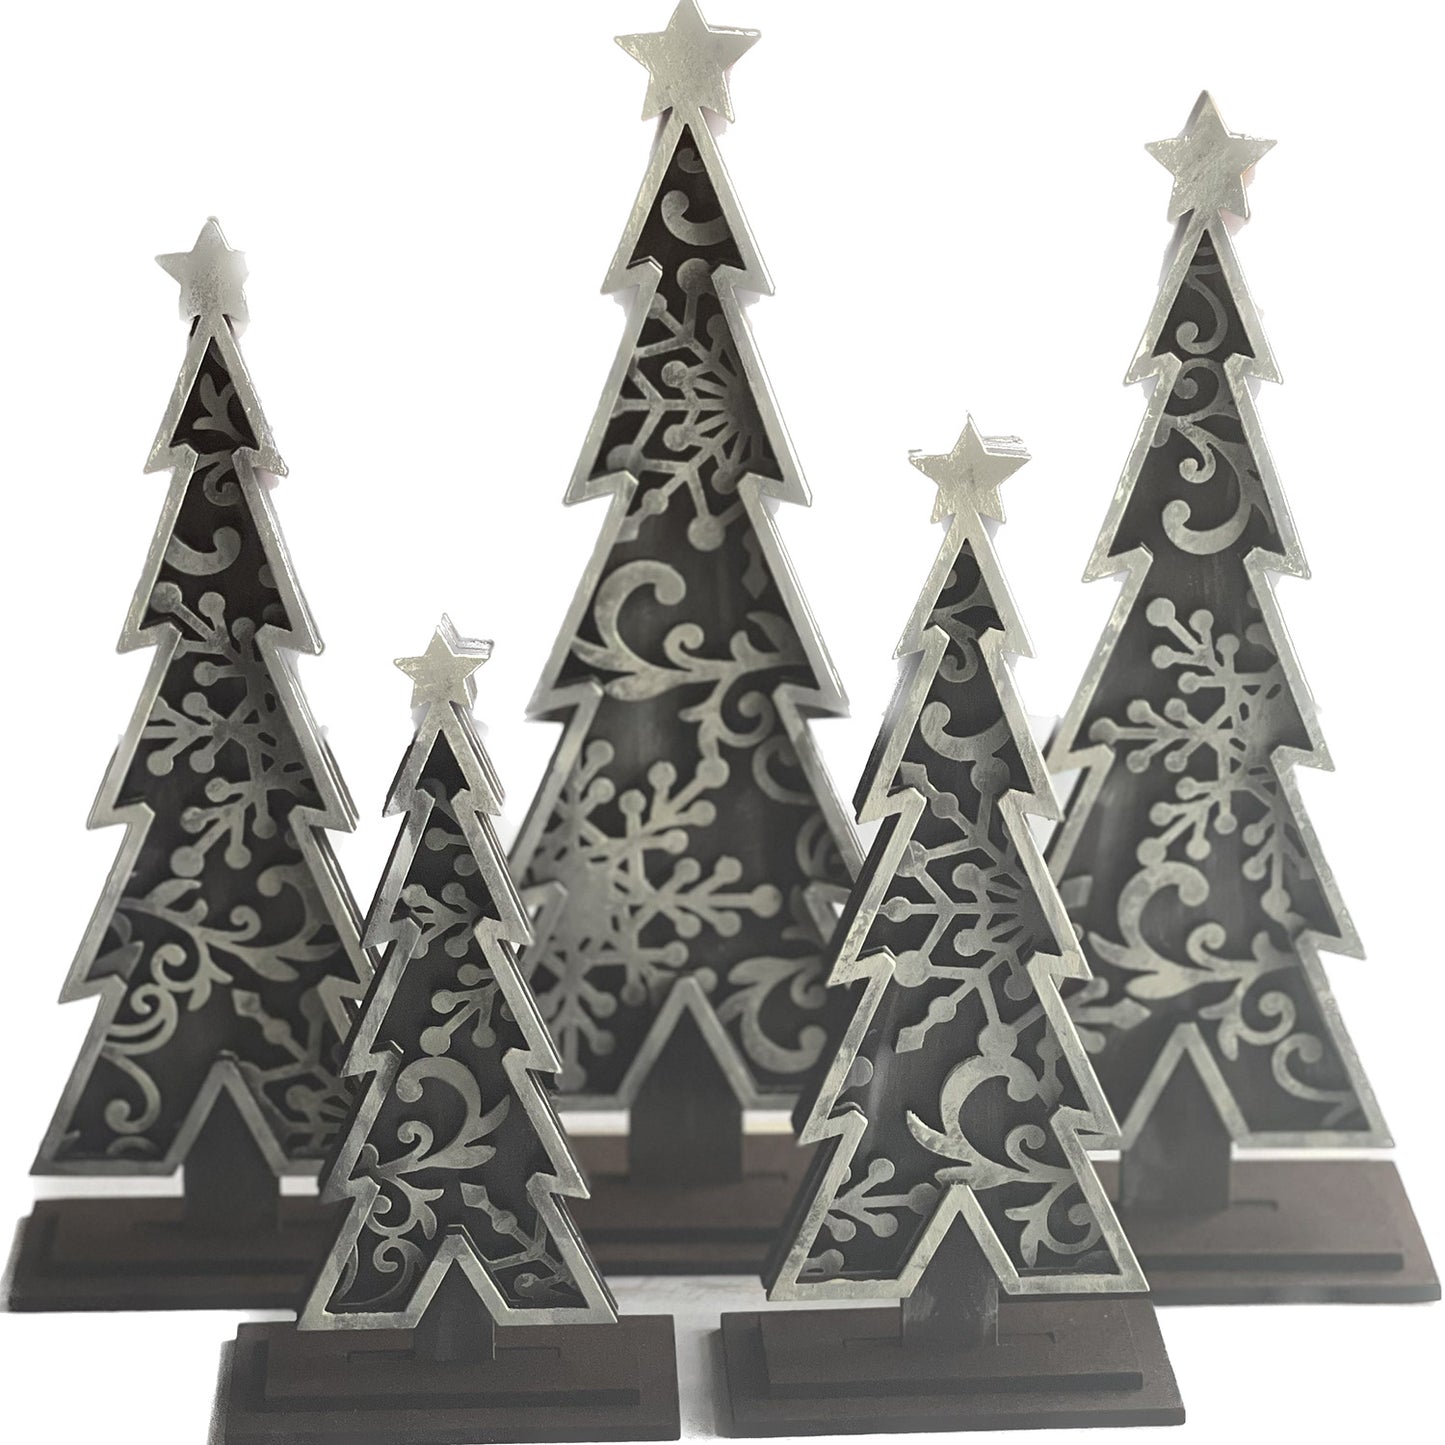 Flourish Snowflake Christmas Tree Shelf Sitters (Set of 5)